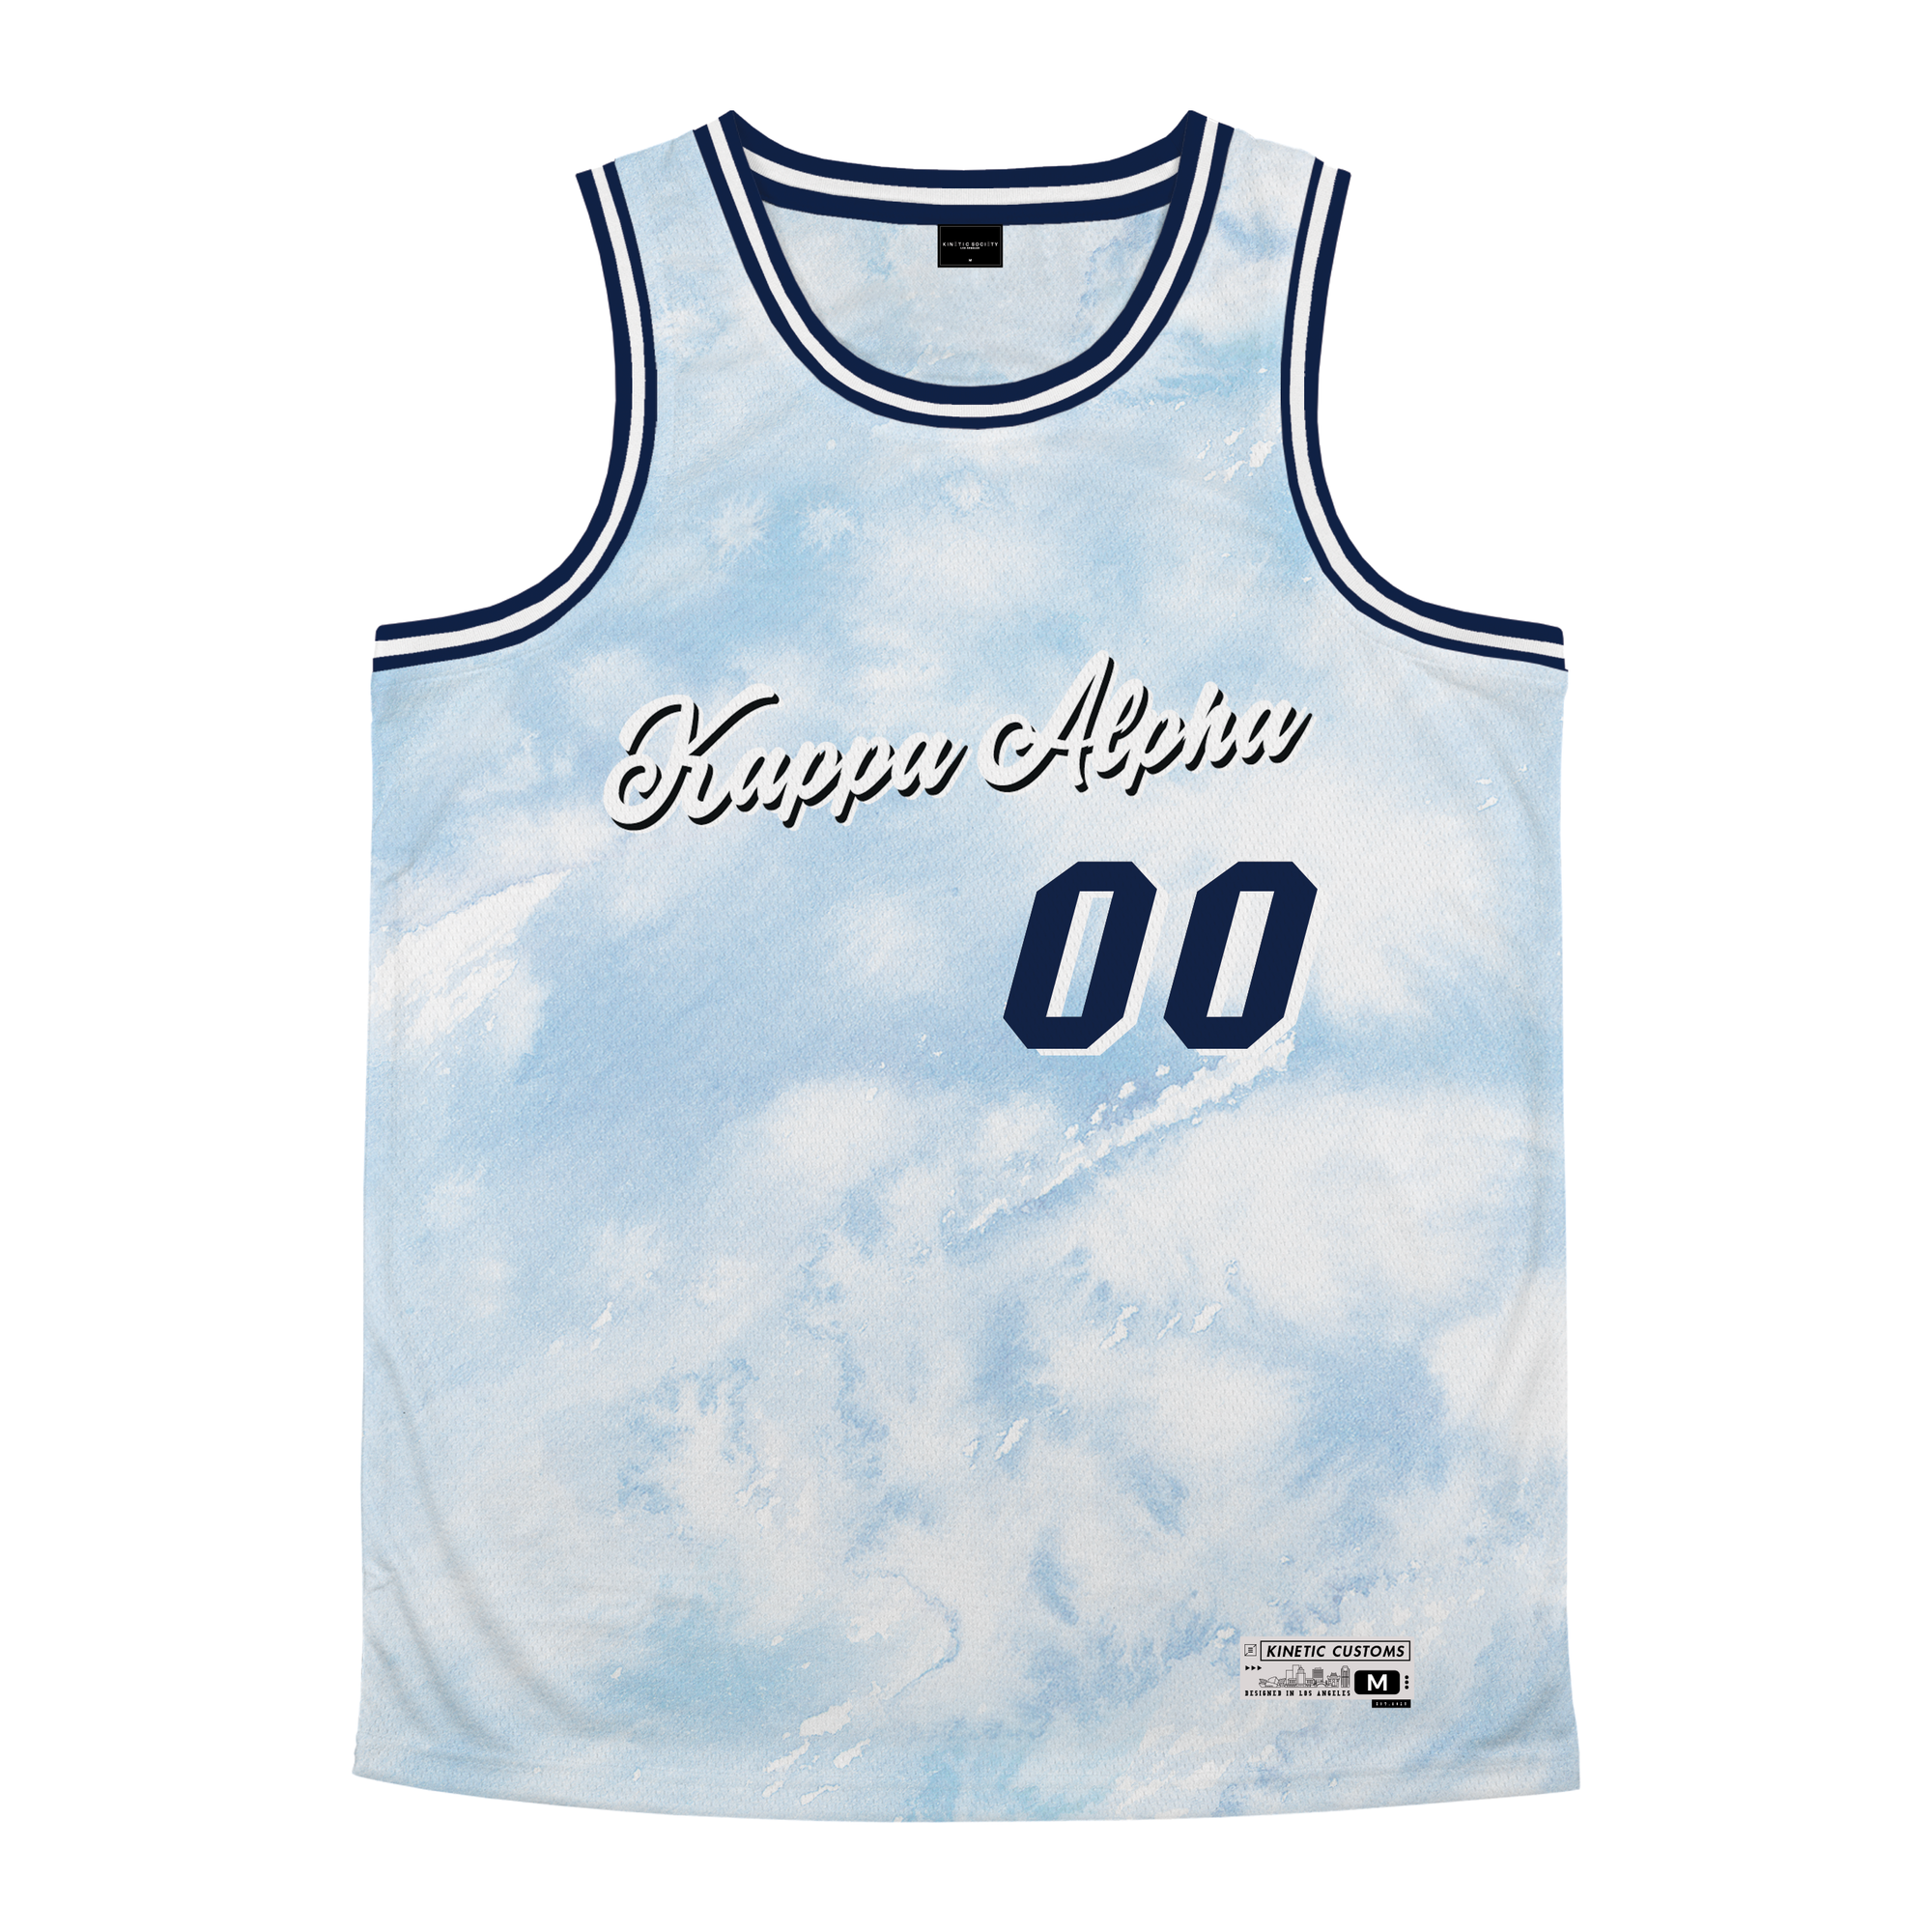 Kappa Alpha Order - Blue Sky Basketball Jersey